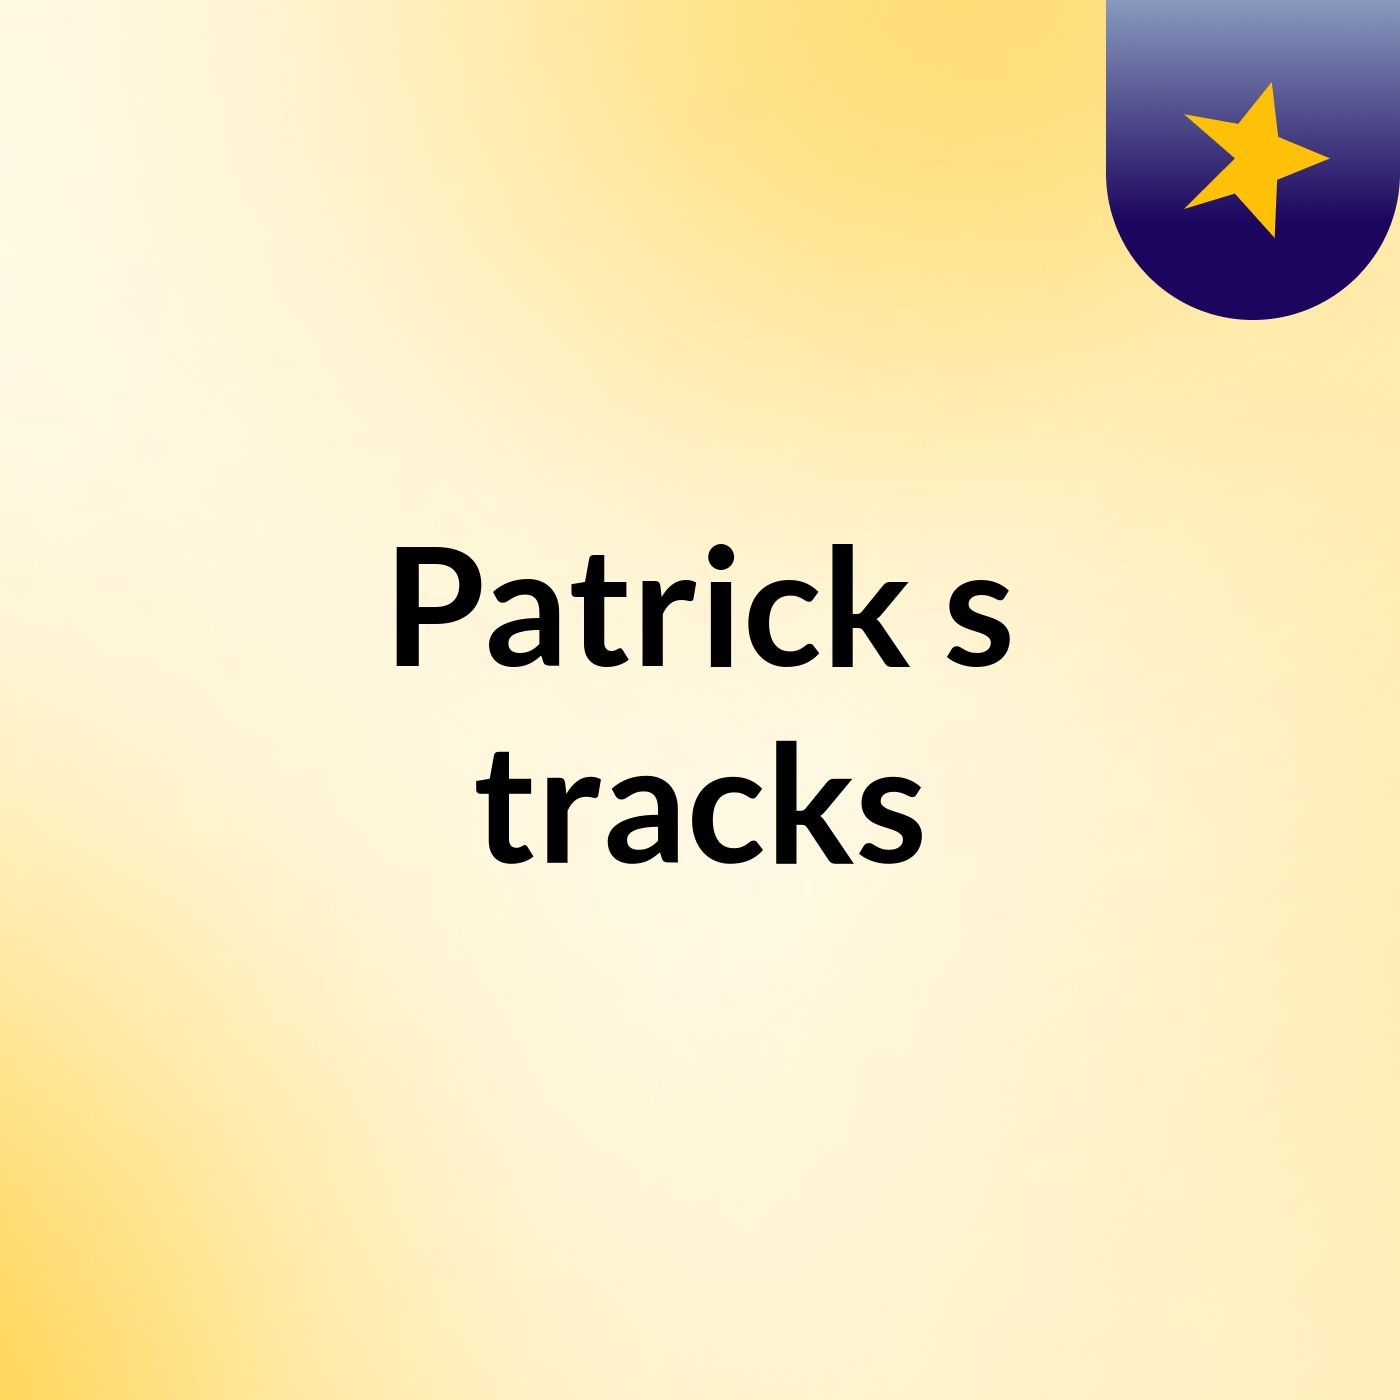 Patrick's tracks